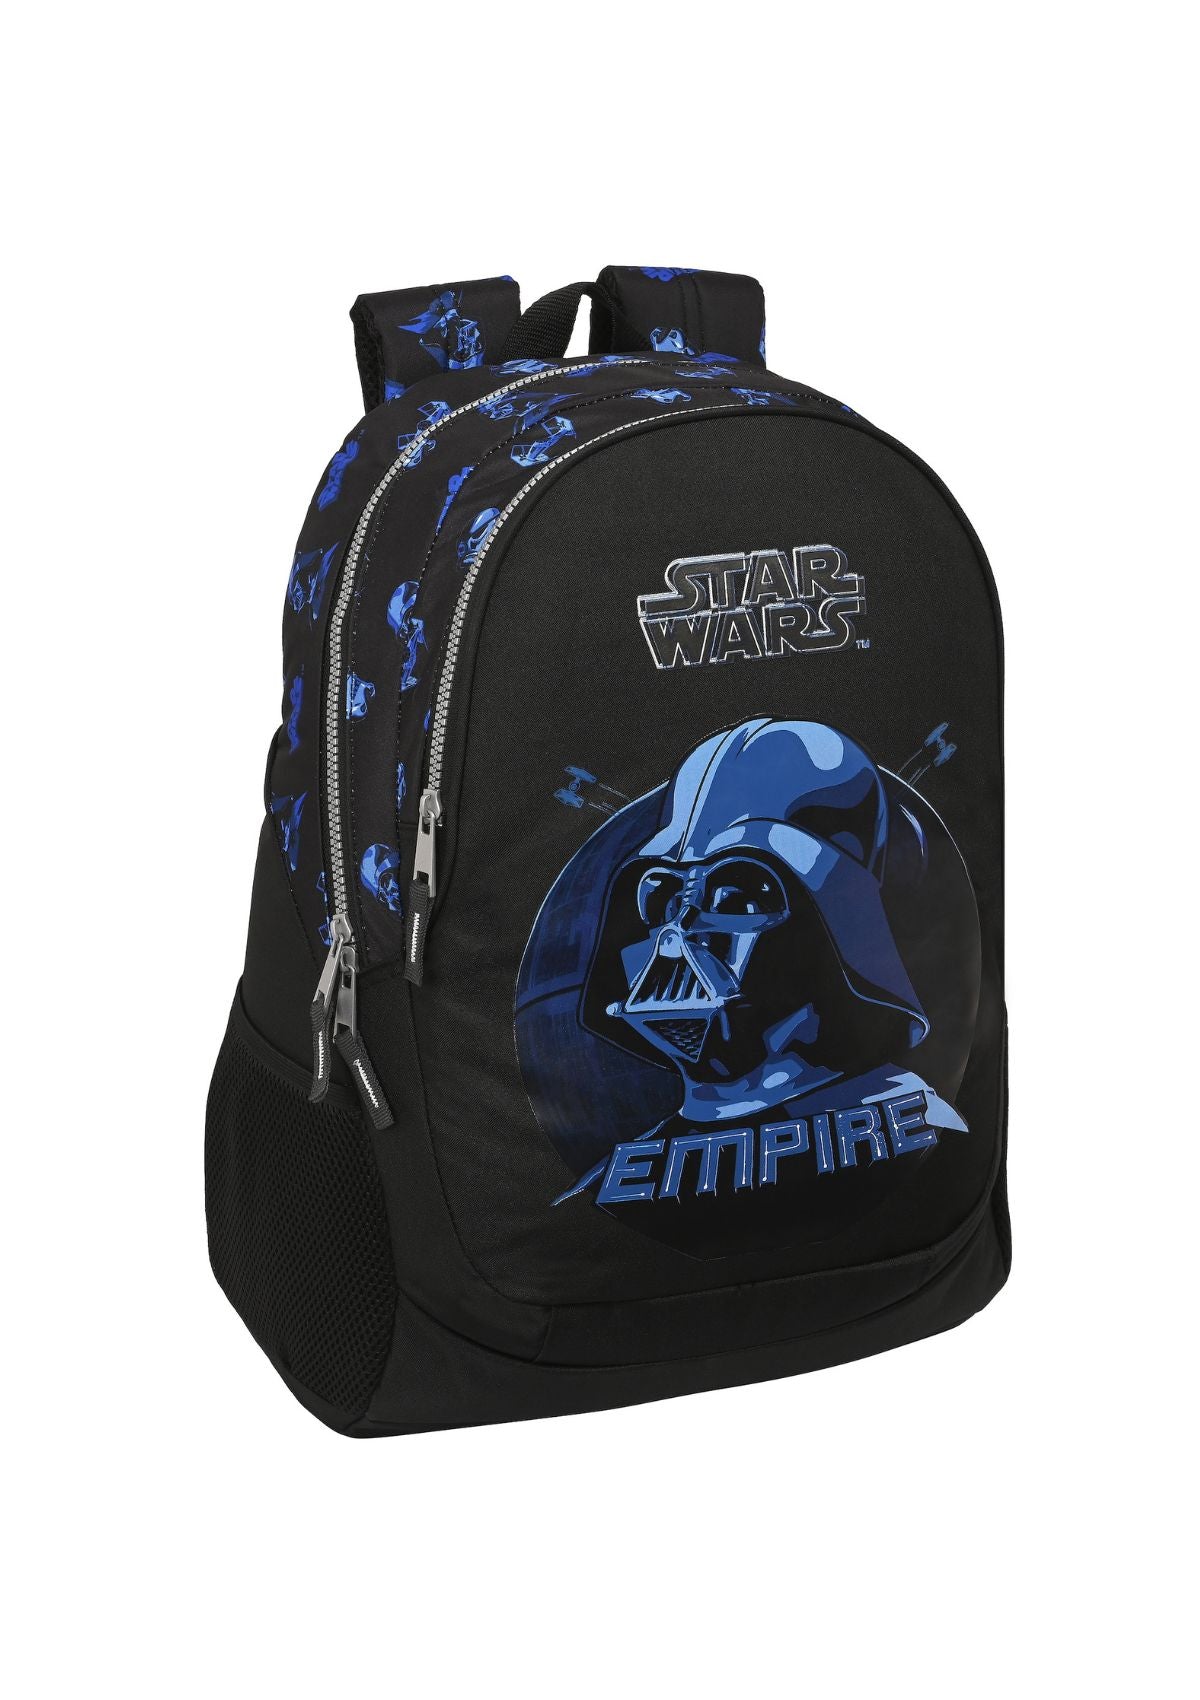 Star Wars Large Backpack front